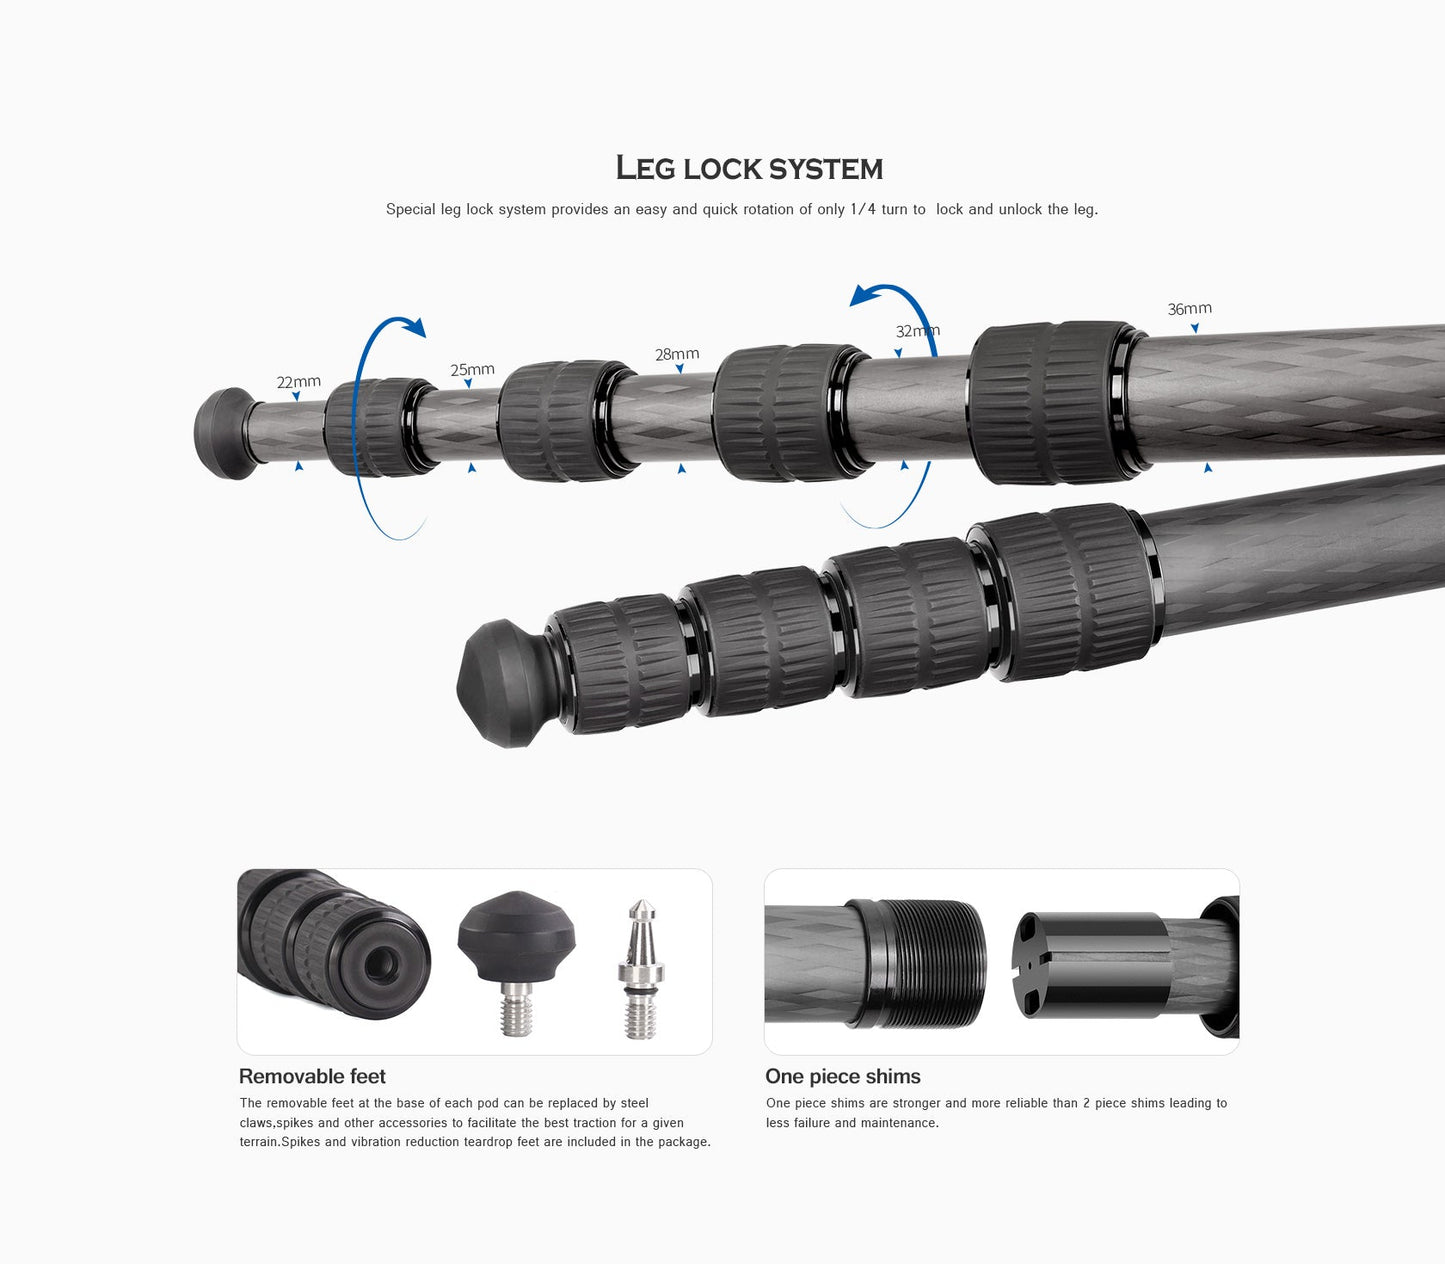 
                  
                    Leofoto LS-365C Camo Professional Light Weight Carbon Fiber Tripod Kit
                  
                